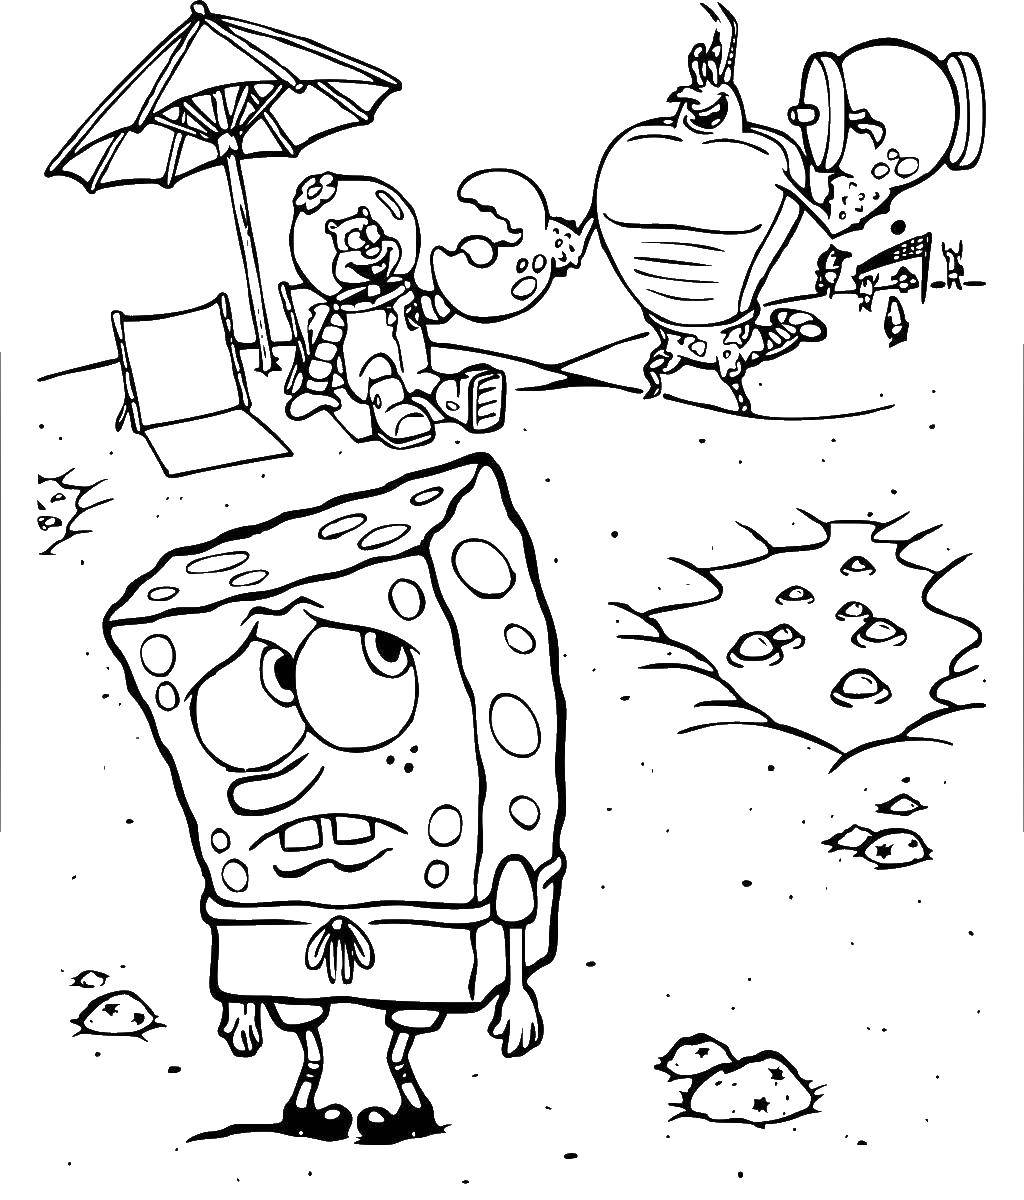 Coloring Spongebob at the beach. Category spongebob. Tags:  the spongebob, Patrick.